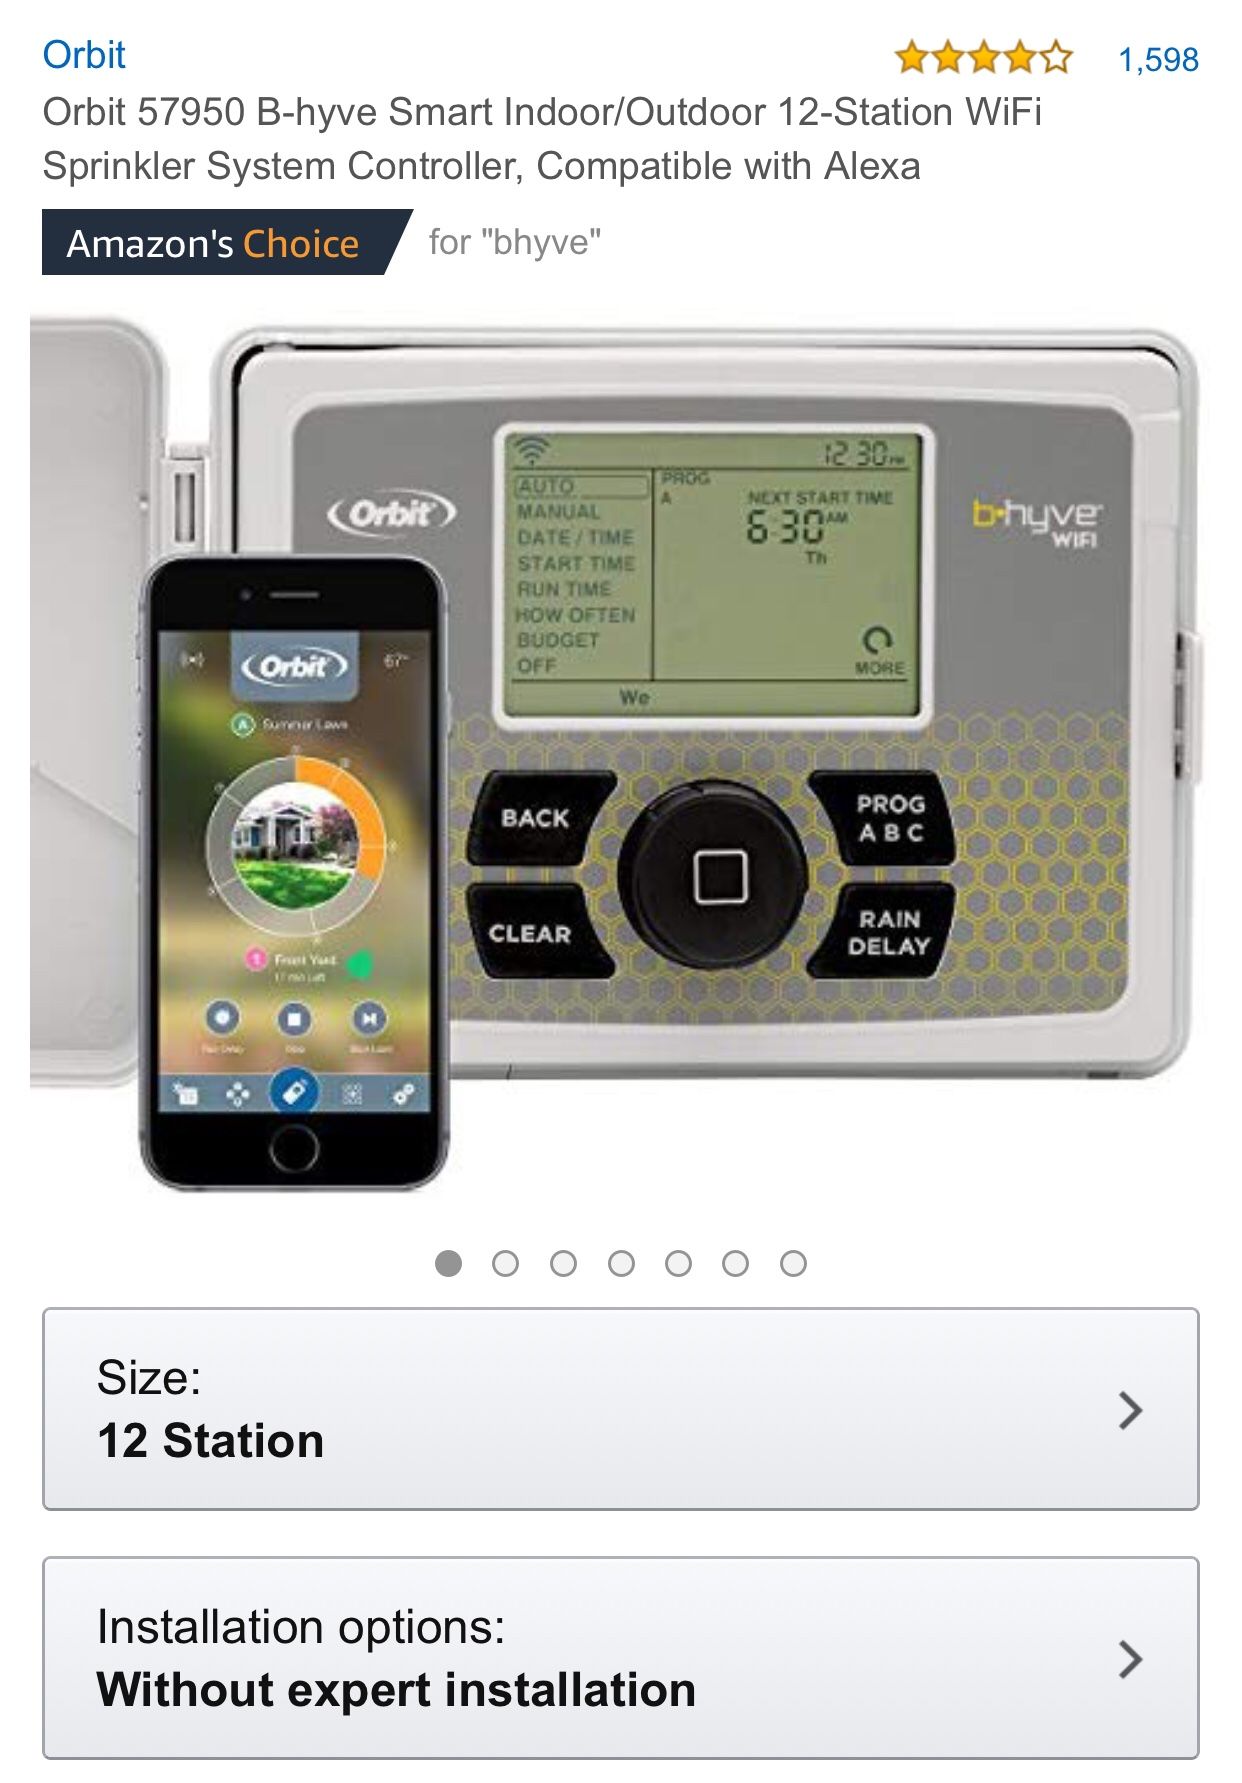 Orbit 57950 B-hyve Smart Indoor/Outdoor 12-Station WiFi Sprinkler System Controller, Compatible with Alexa